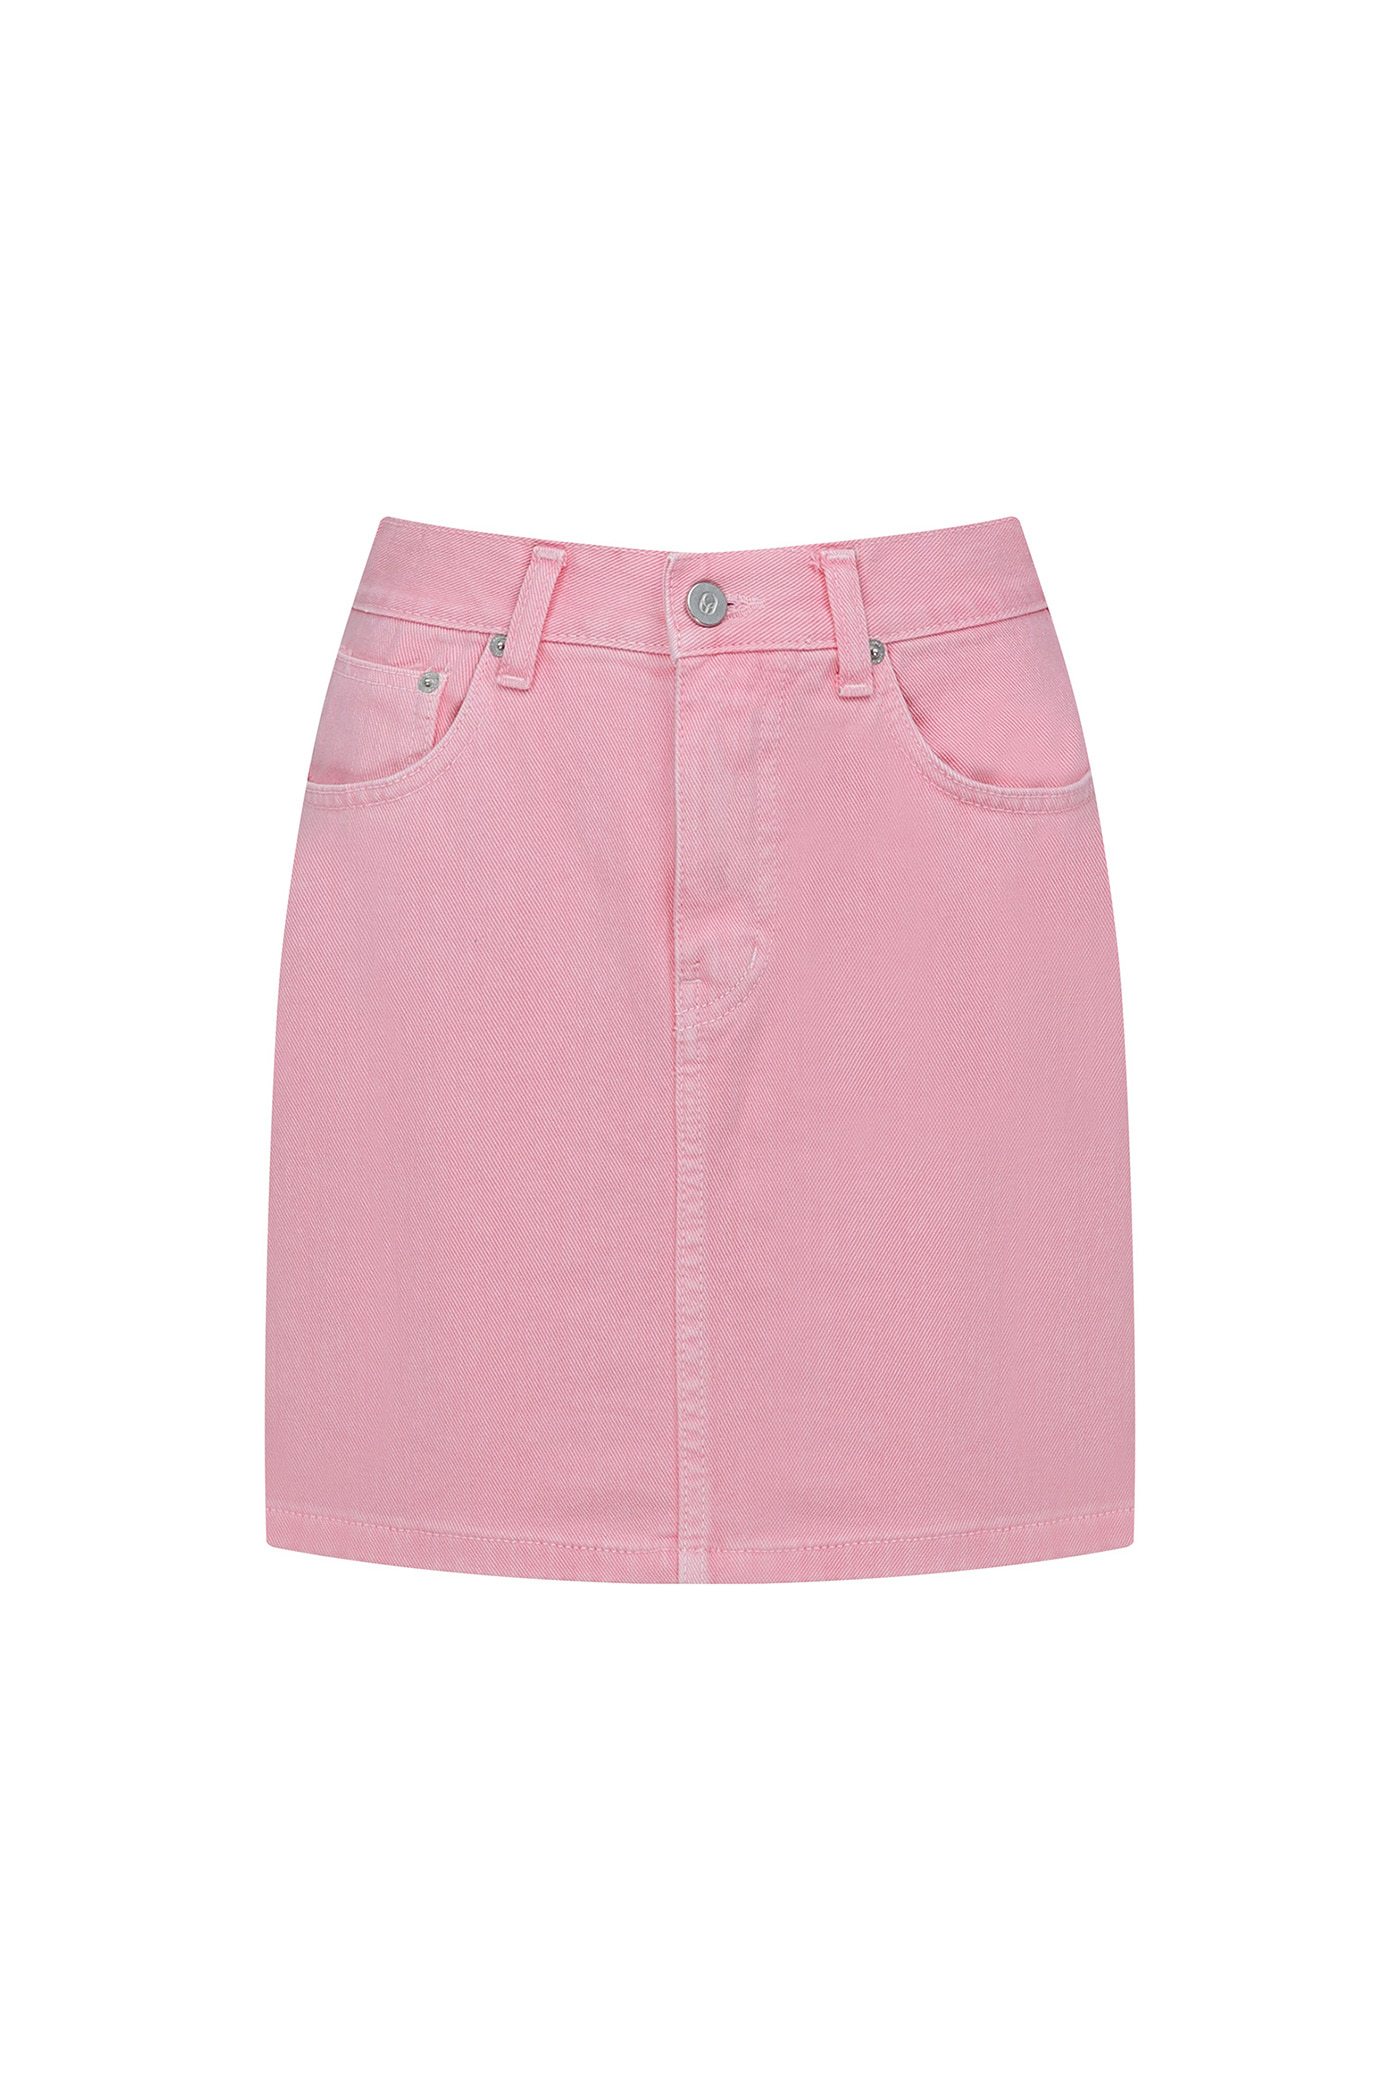 [SAMPLE]Dyeing Mini Denim Skirt-Pink